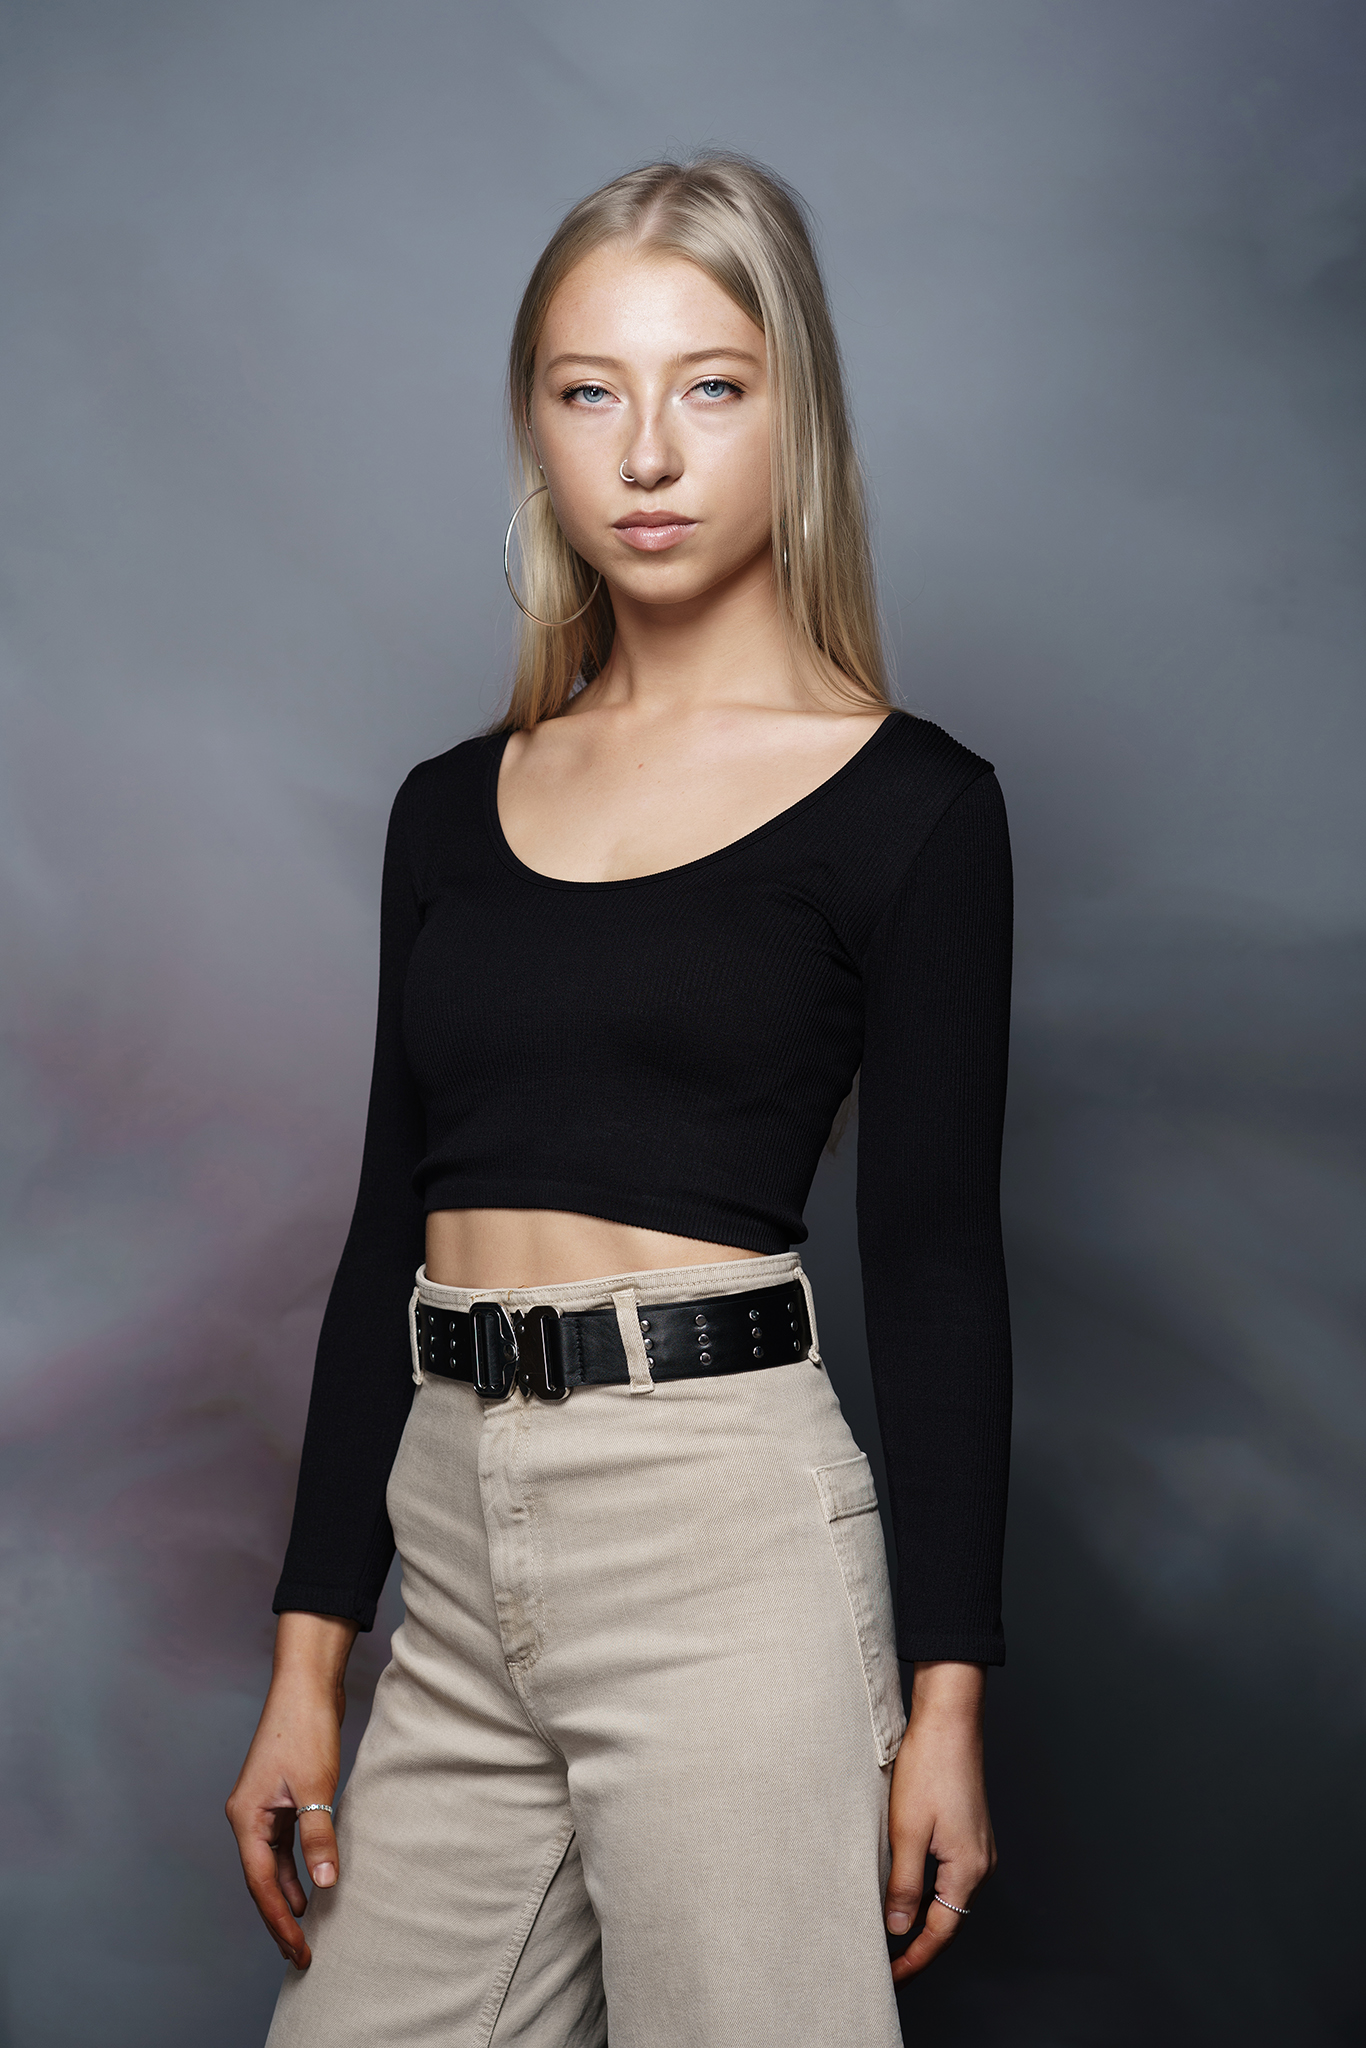 blonde model portfolio shot with grey background by Portrait photographer Preston